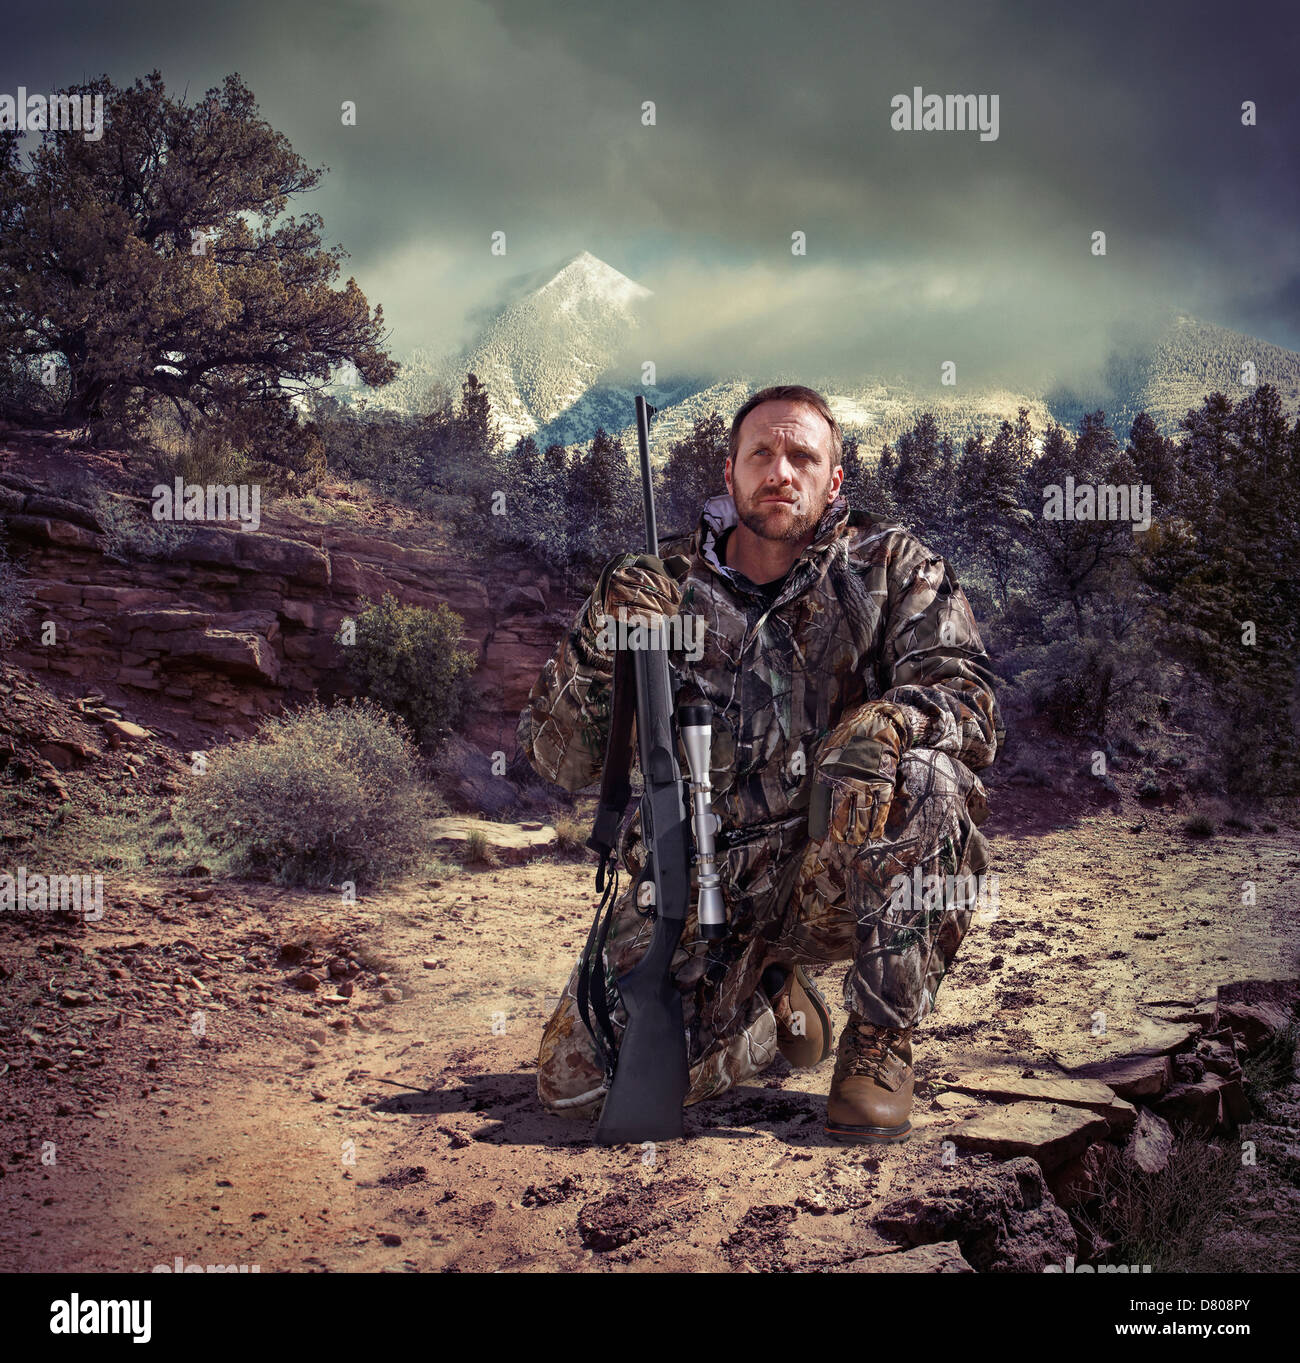 Soldier holding gun in dry rural landscape Stock Photo